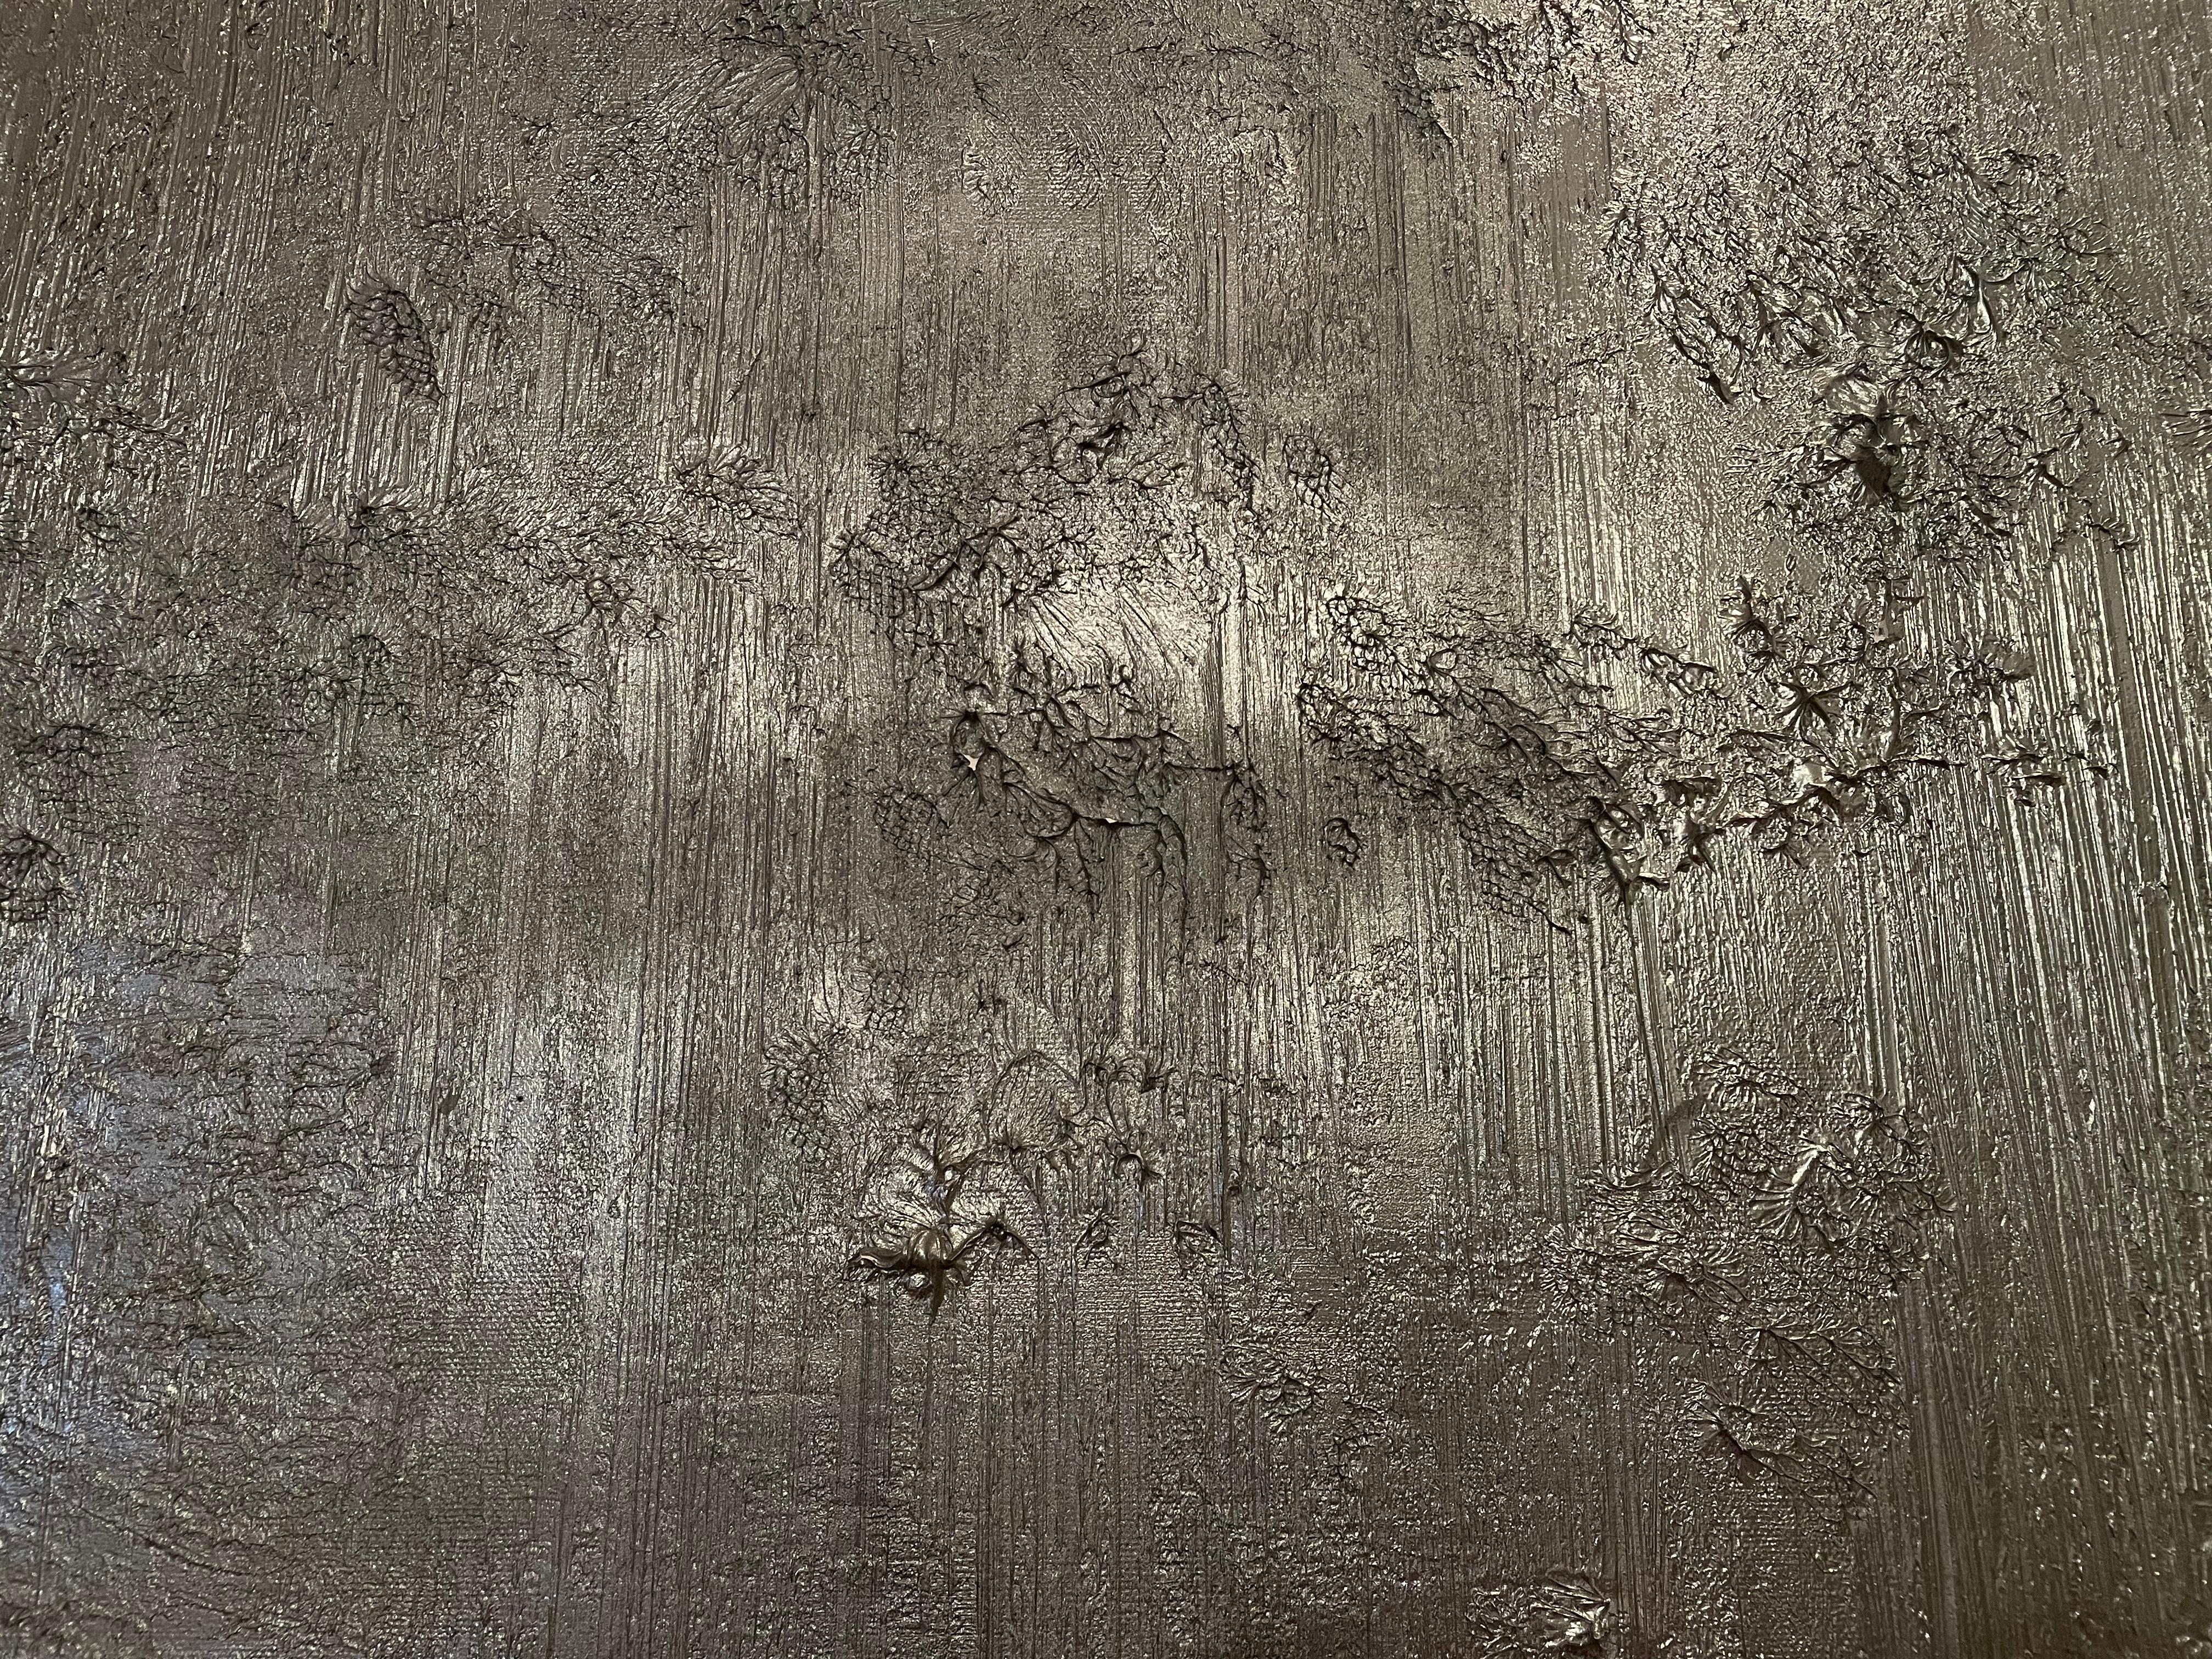 ‘Untitled’ Contemporary Metallic Grey Abstract Mixed Media By Frida 2021 1